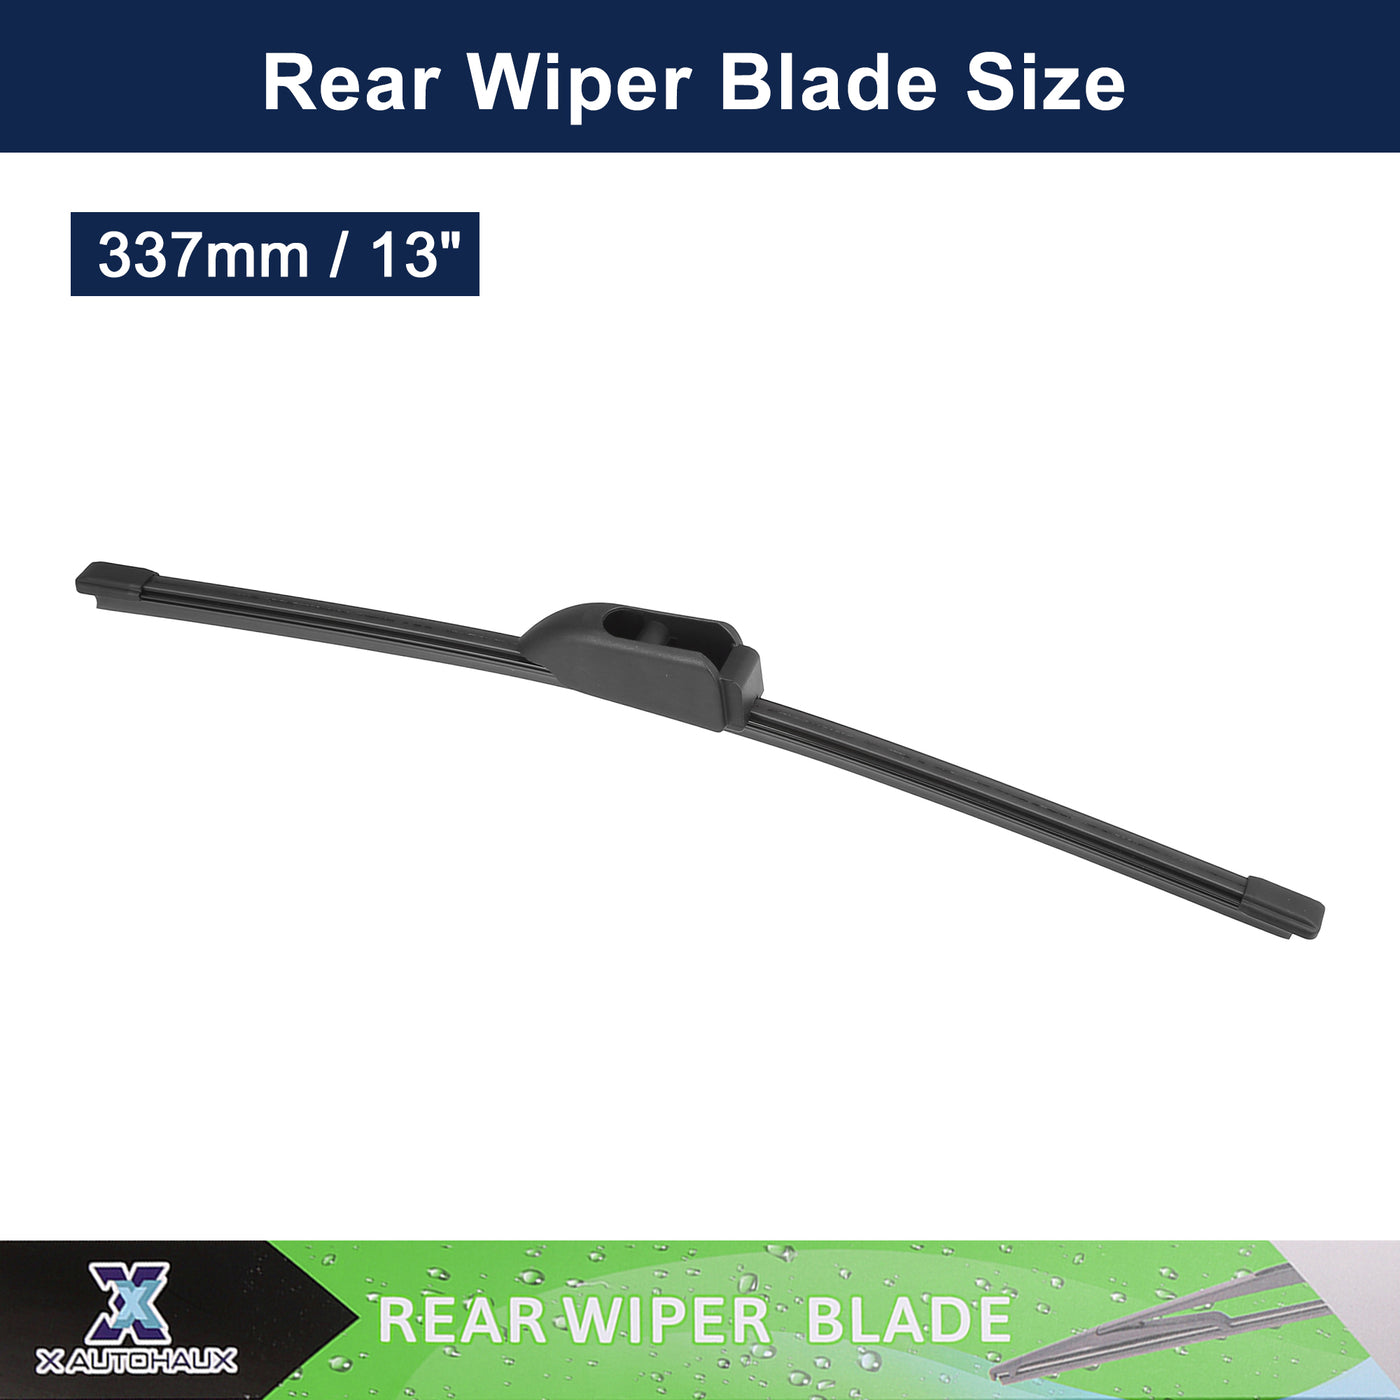 X AUTOHAUX 2pcs Rear Windshield Wiper Blade Replacement for Hyundai Elantra 2012-2017 for Hyundai Elantra GT 2012-2017 for Kia Optima 2015-2018